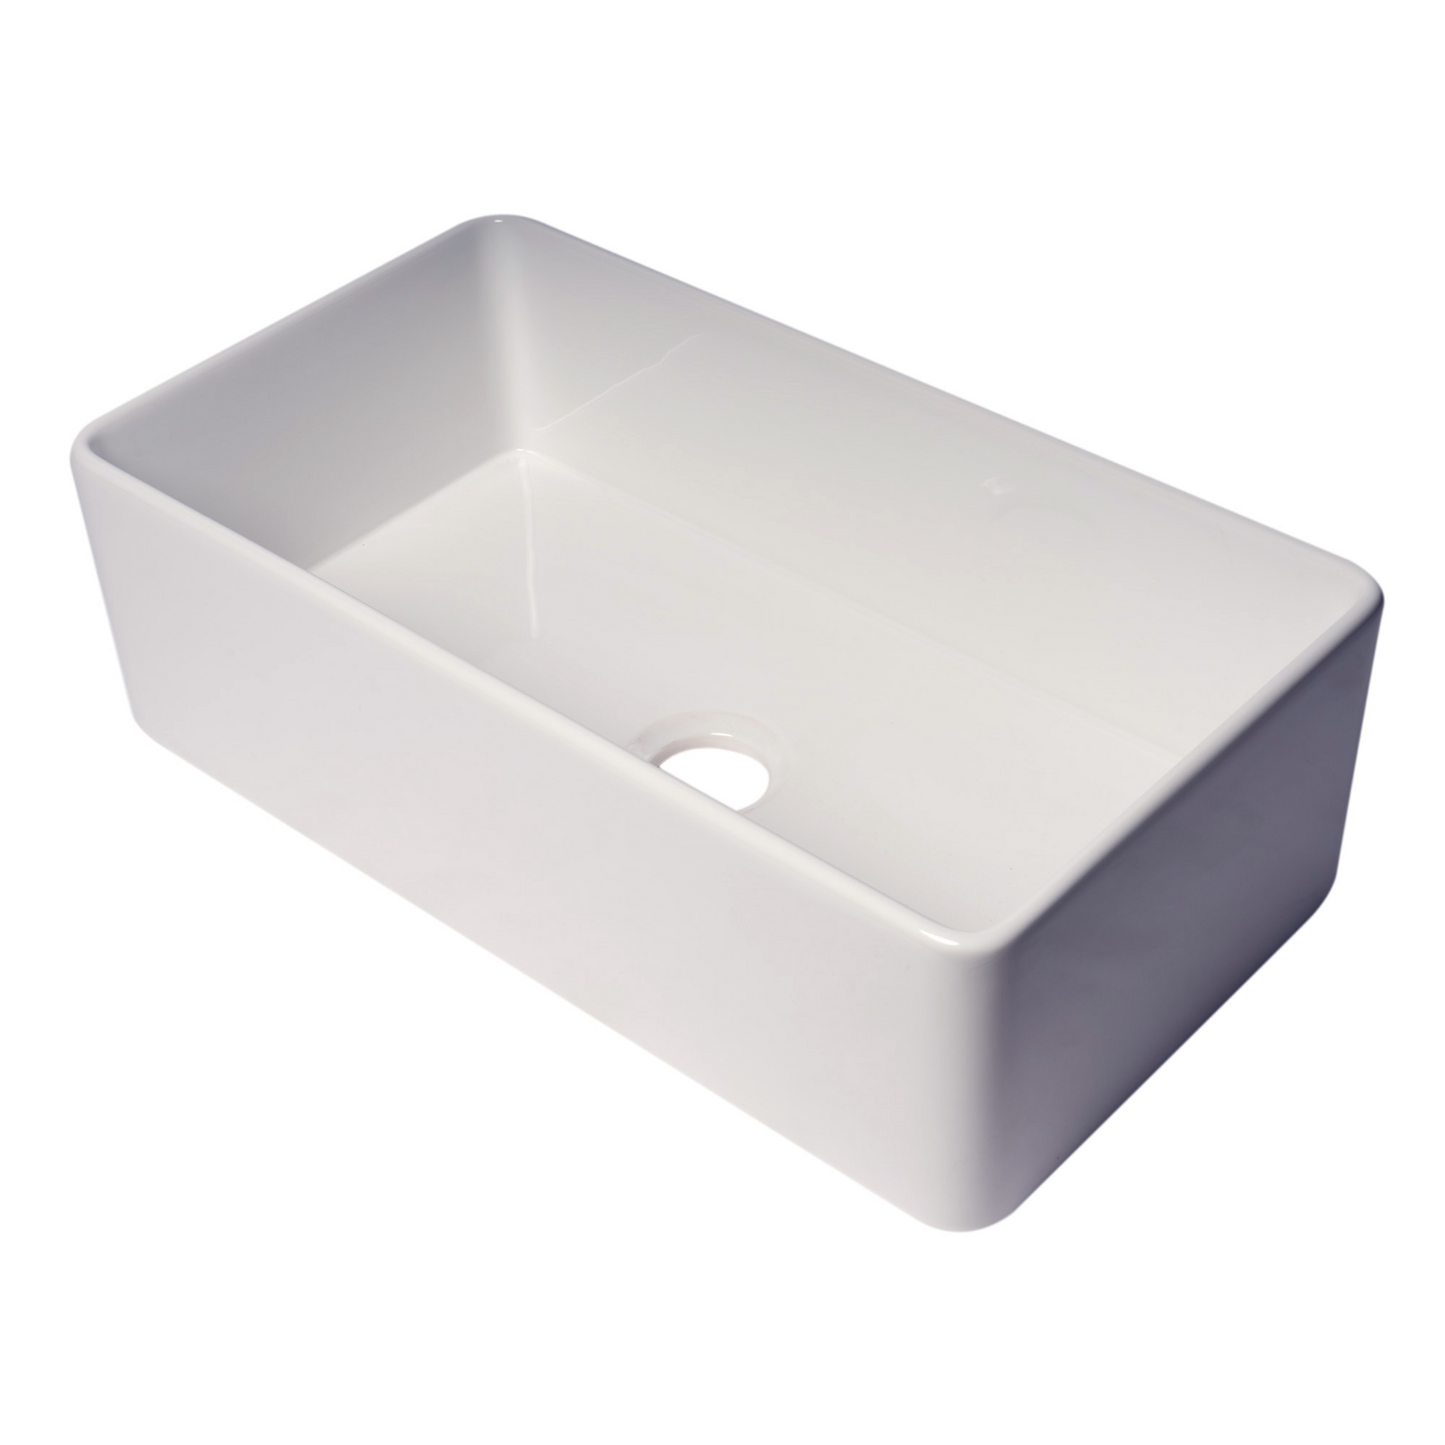 ALFI Brand ABF3318S-W 33" White Thin Wall Single Bowl Smooth Apron Fireclay Kitchen Farm Sink